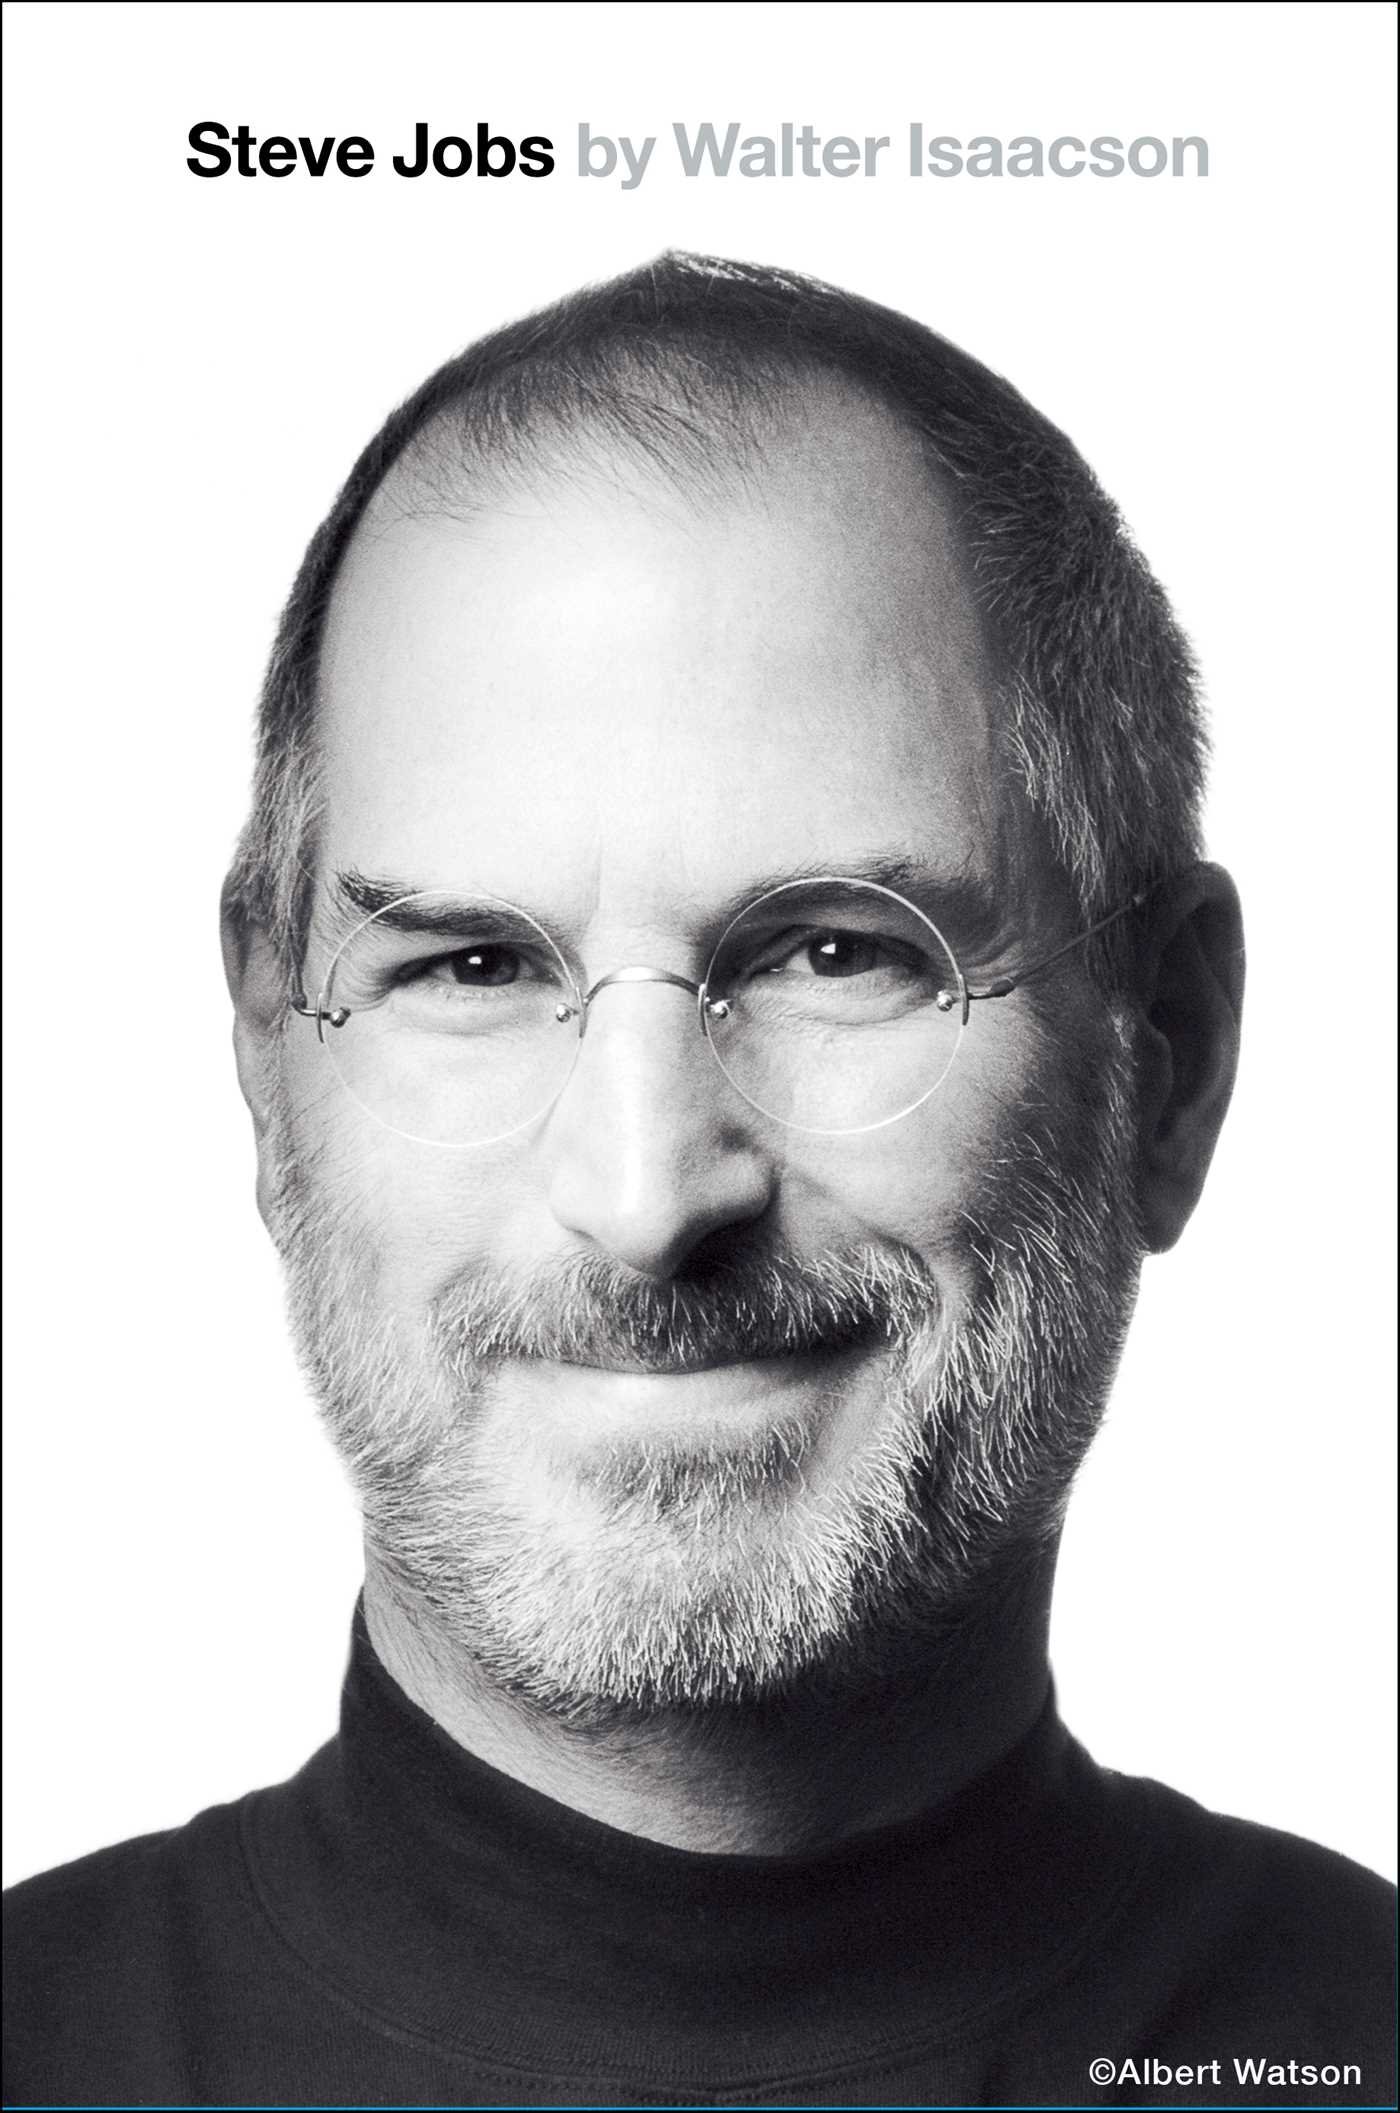 Steve Jobs defends Apple in taped testimony